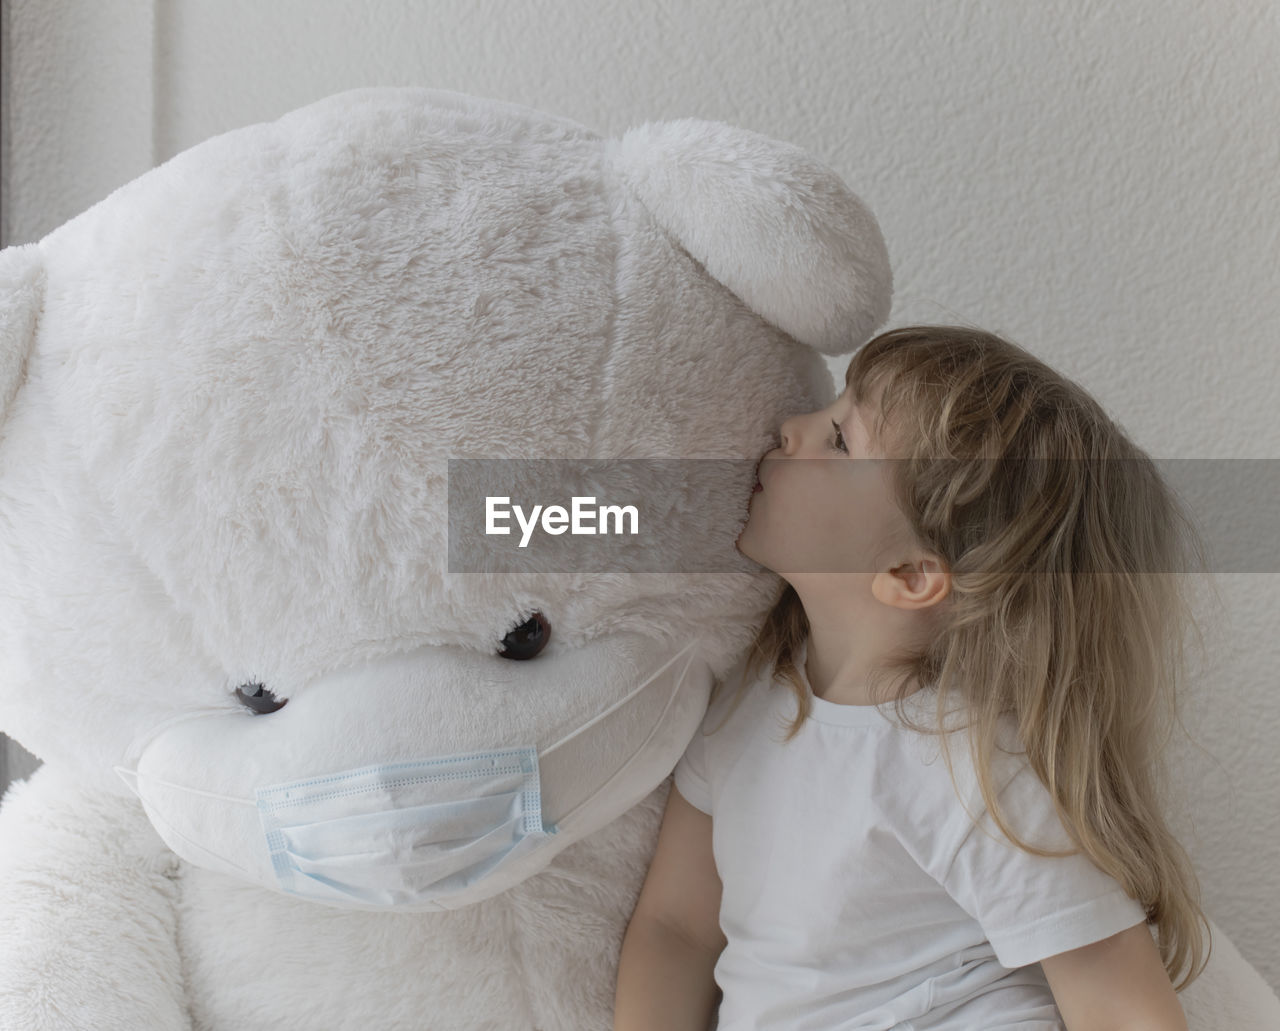 The girl of 5 is kissing her white plush teddy bear.